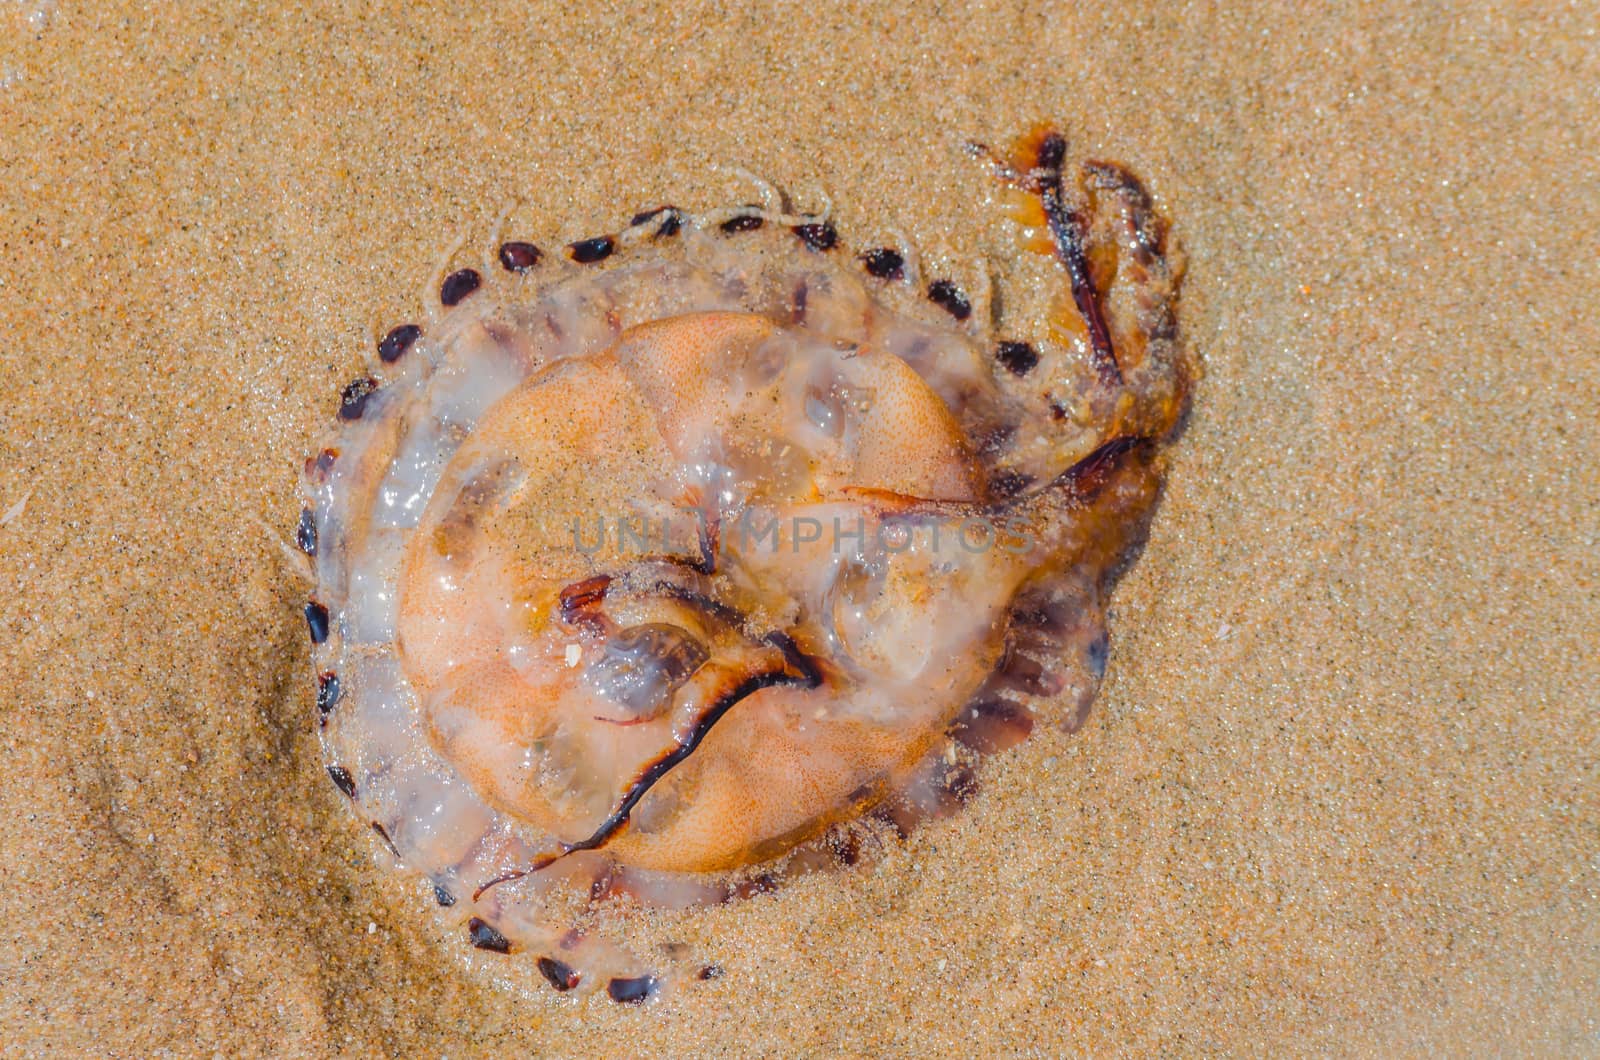 Jellyfish on a sandy beach by JFsPic